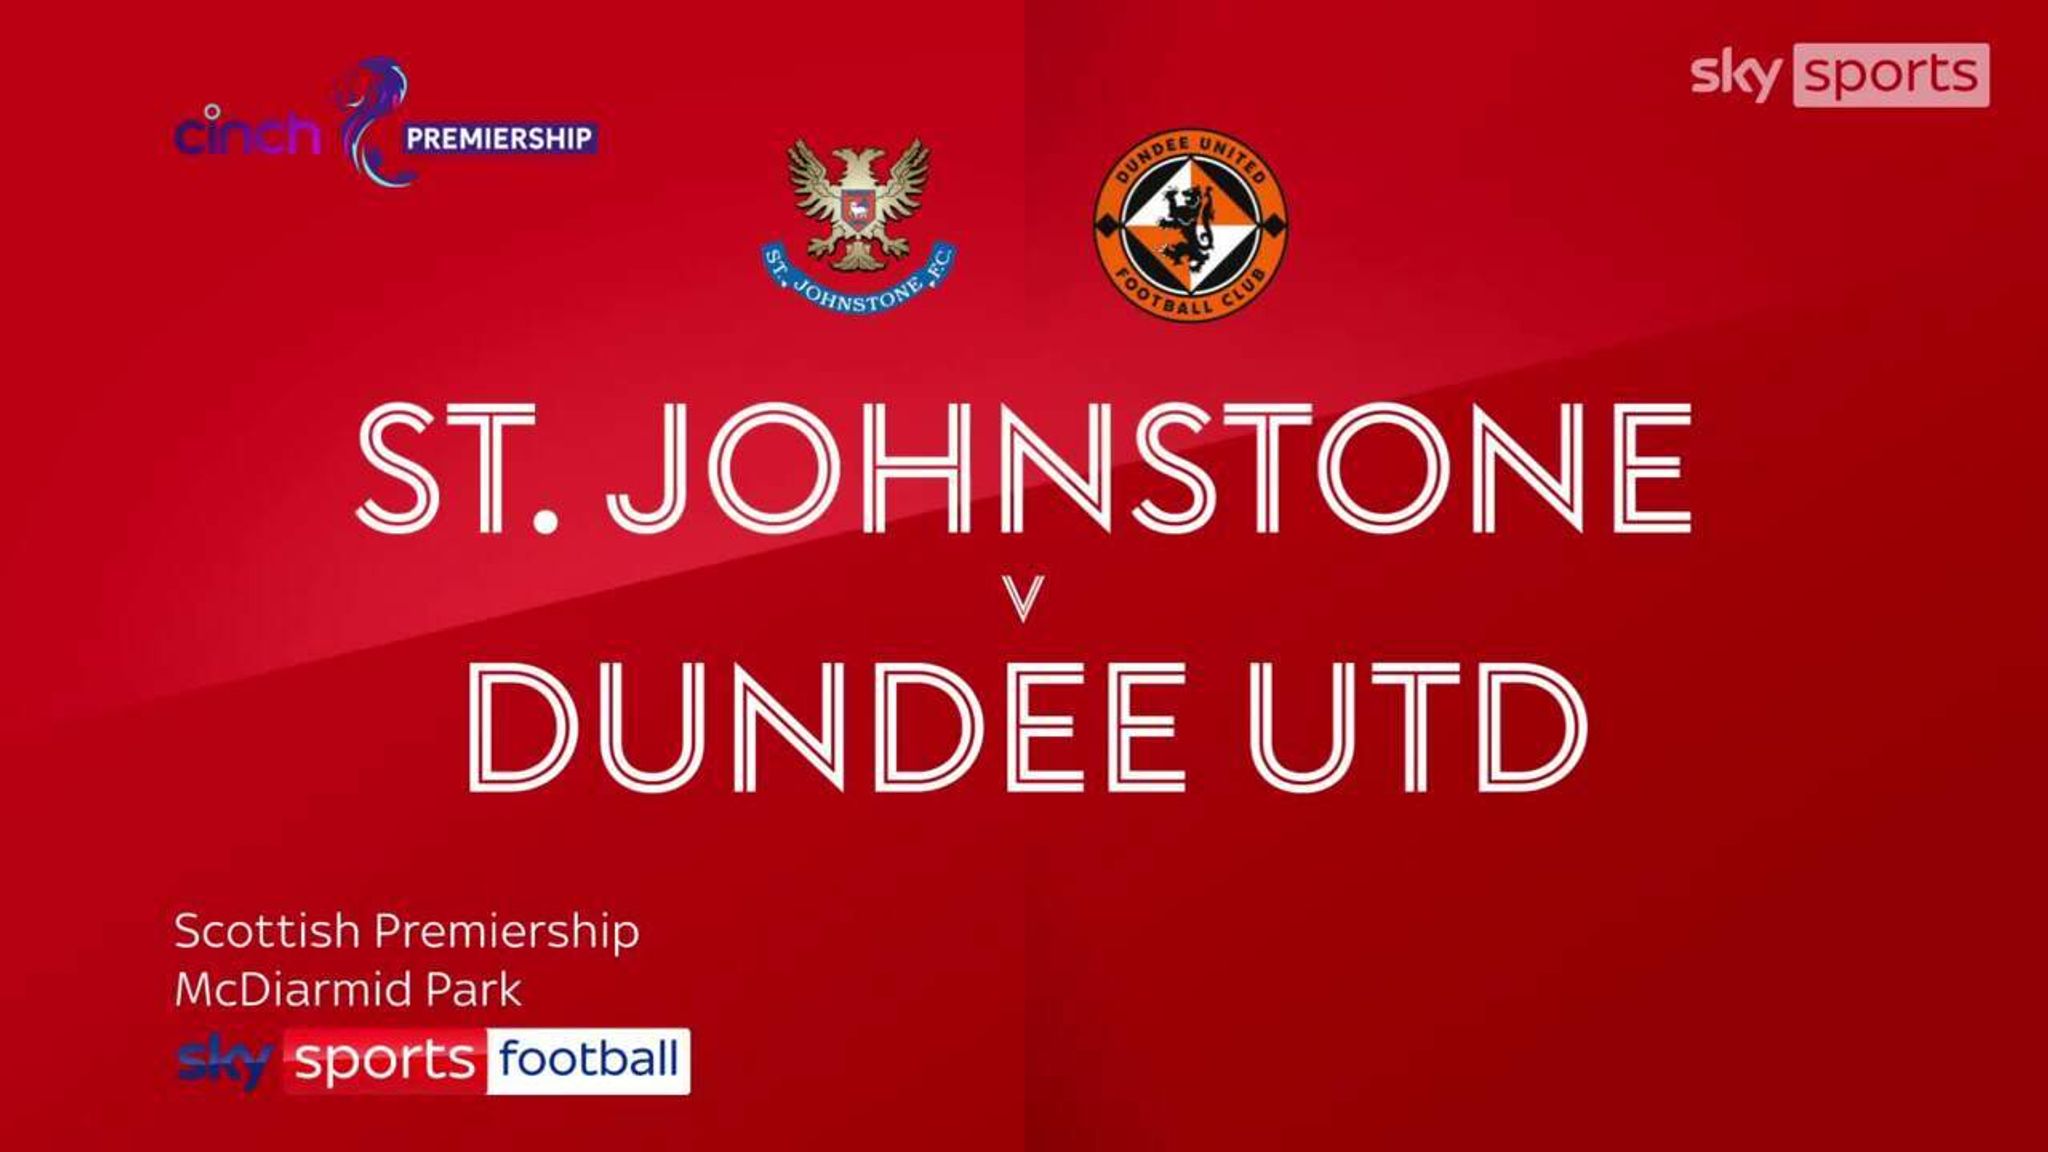 St Johnstone 1-0 Dundee Utd Scottish Premiership highlights Video Watch TV Show Sky Sports